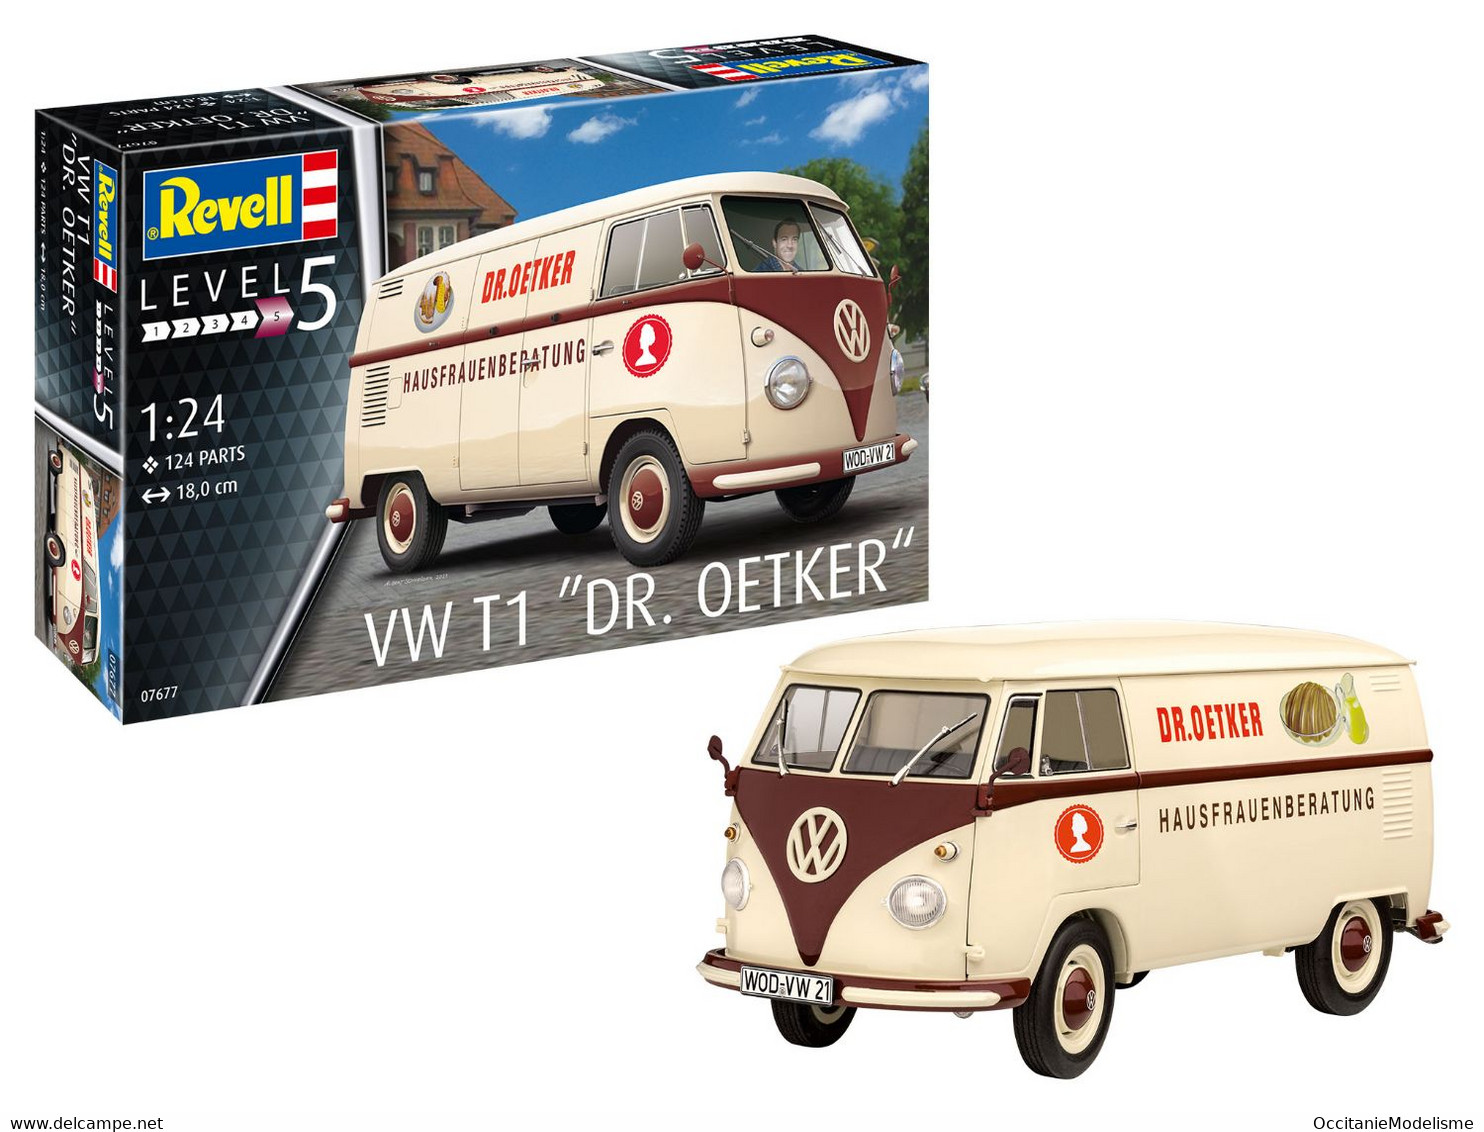 Revell - VW Volkswagen T1 DR. OETKER Combi Maquette Kit Plastique Réf. 07677 Neuf NBO 1/24 - Voitures